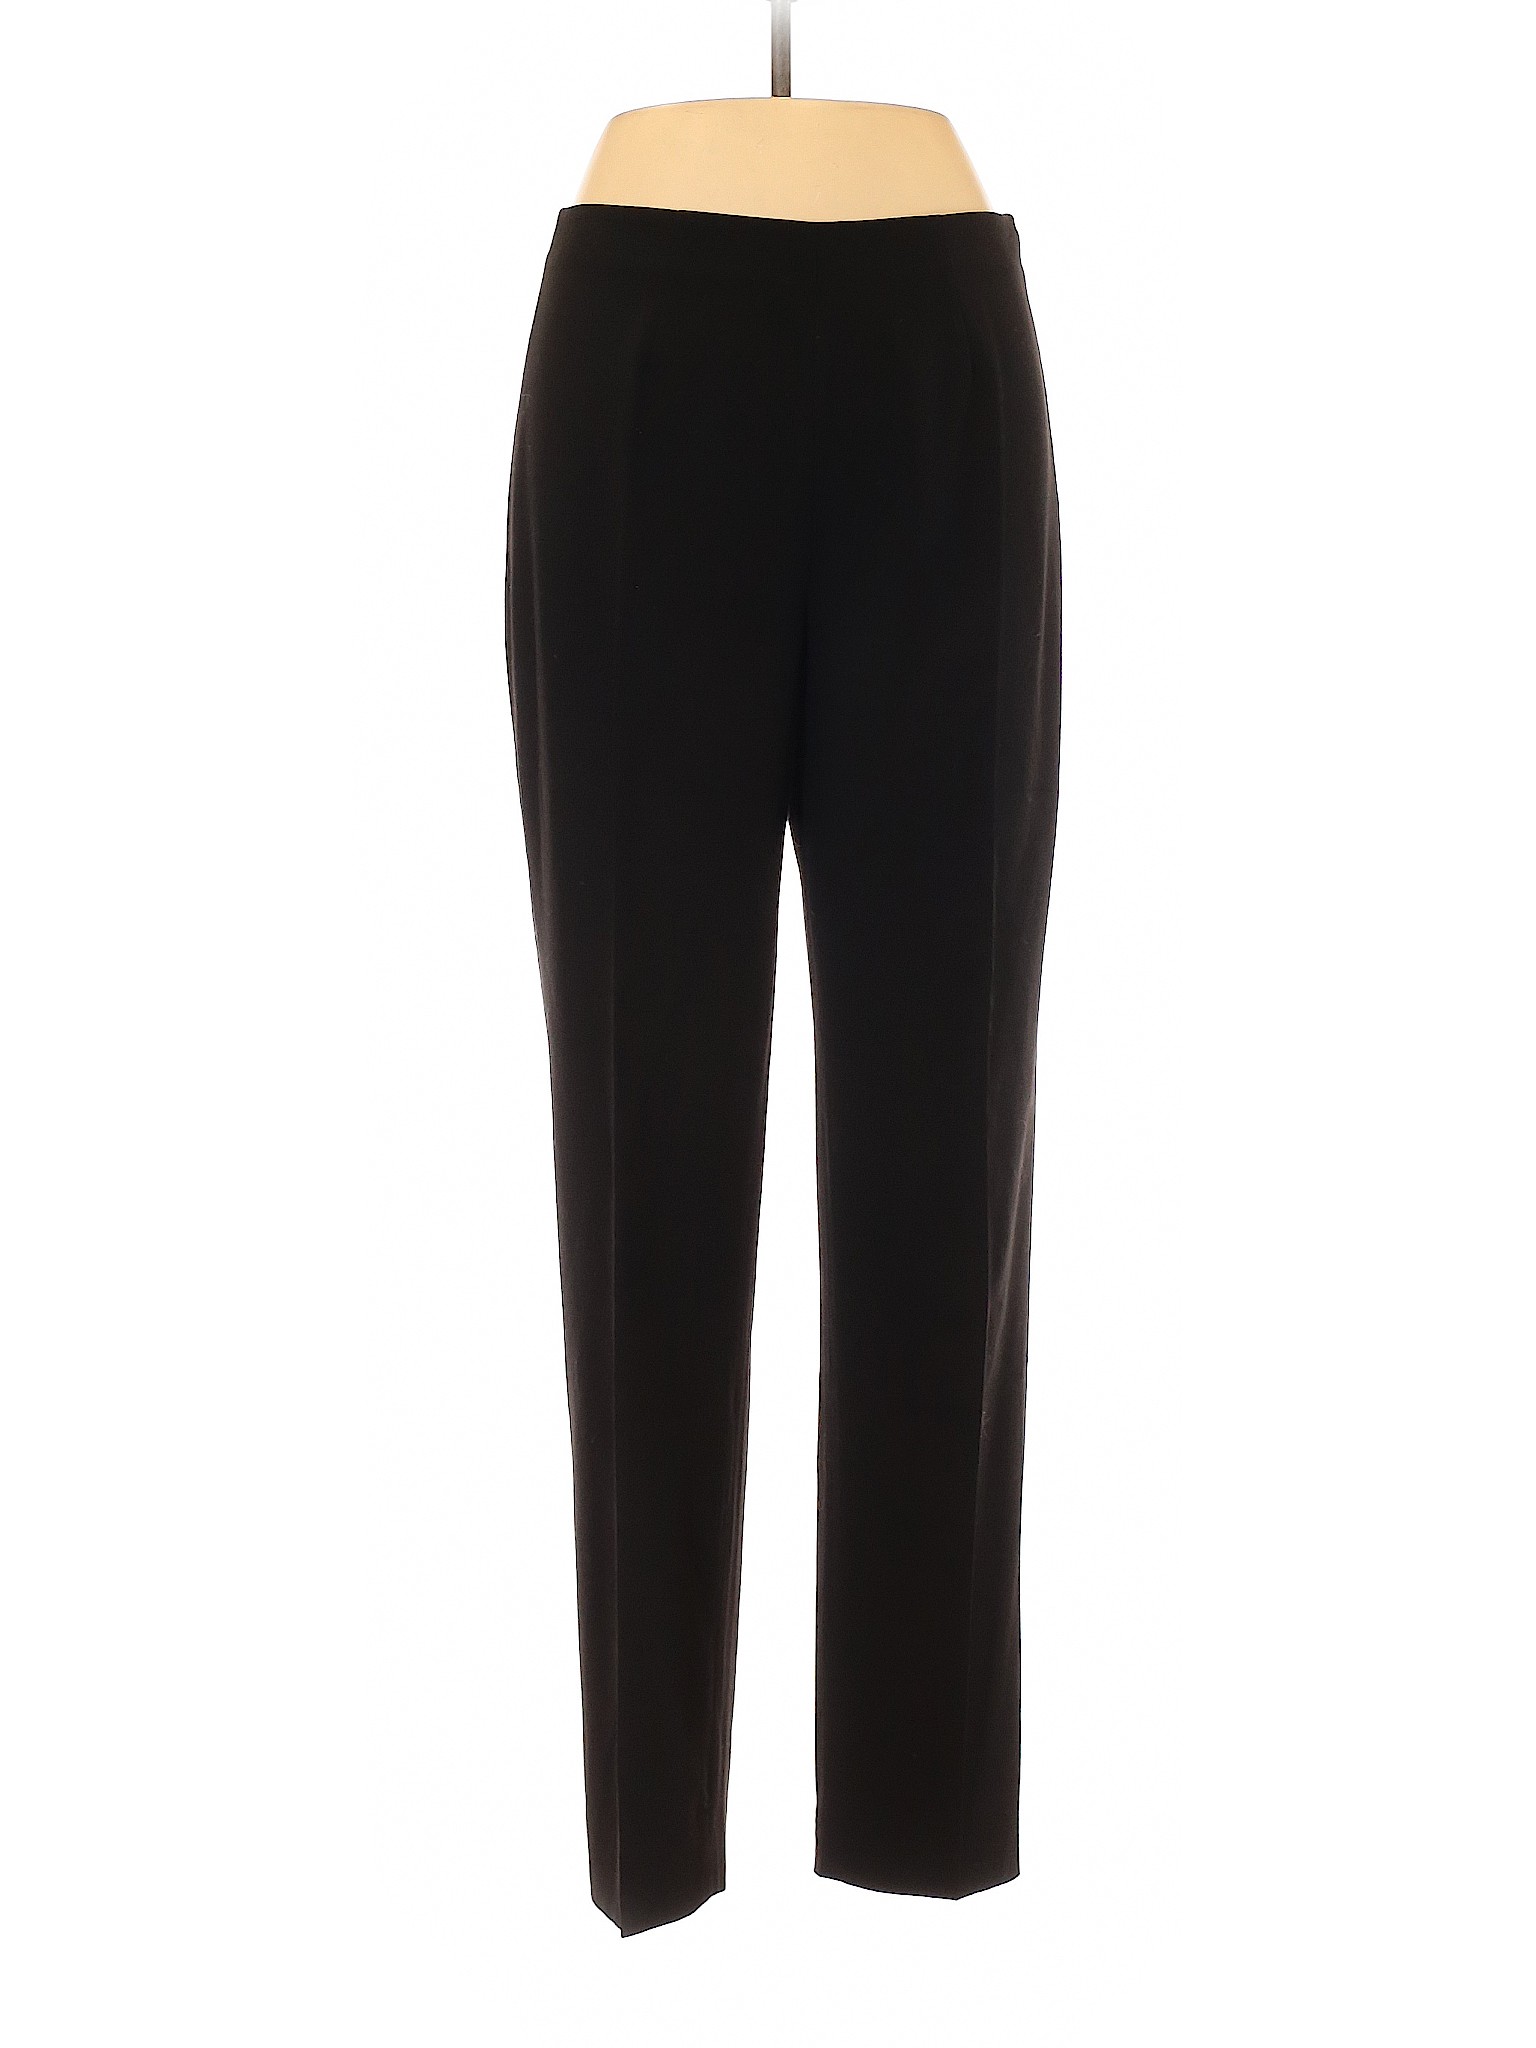 Thalian Women Black Dress Pants 6 | eBay